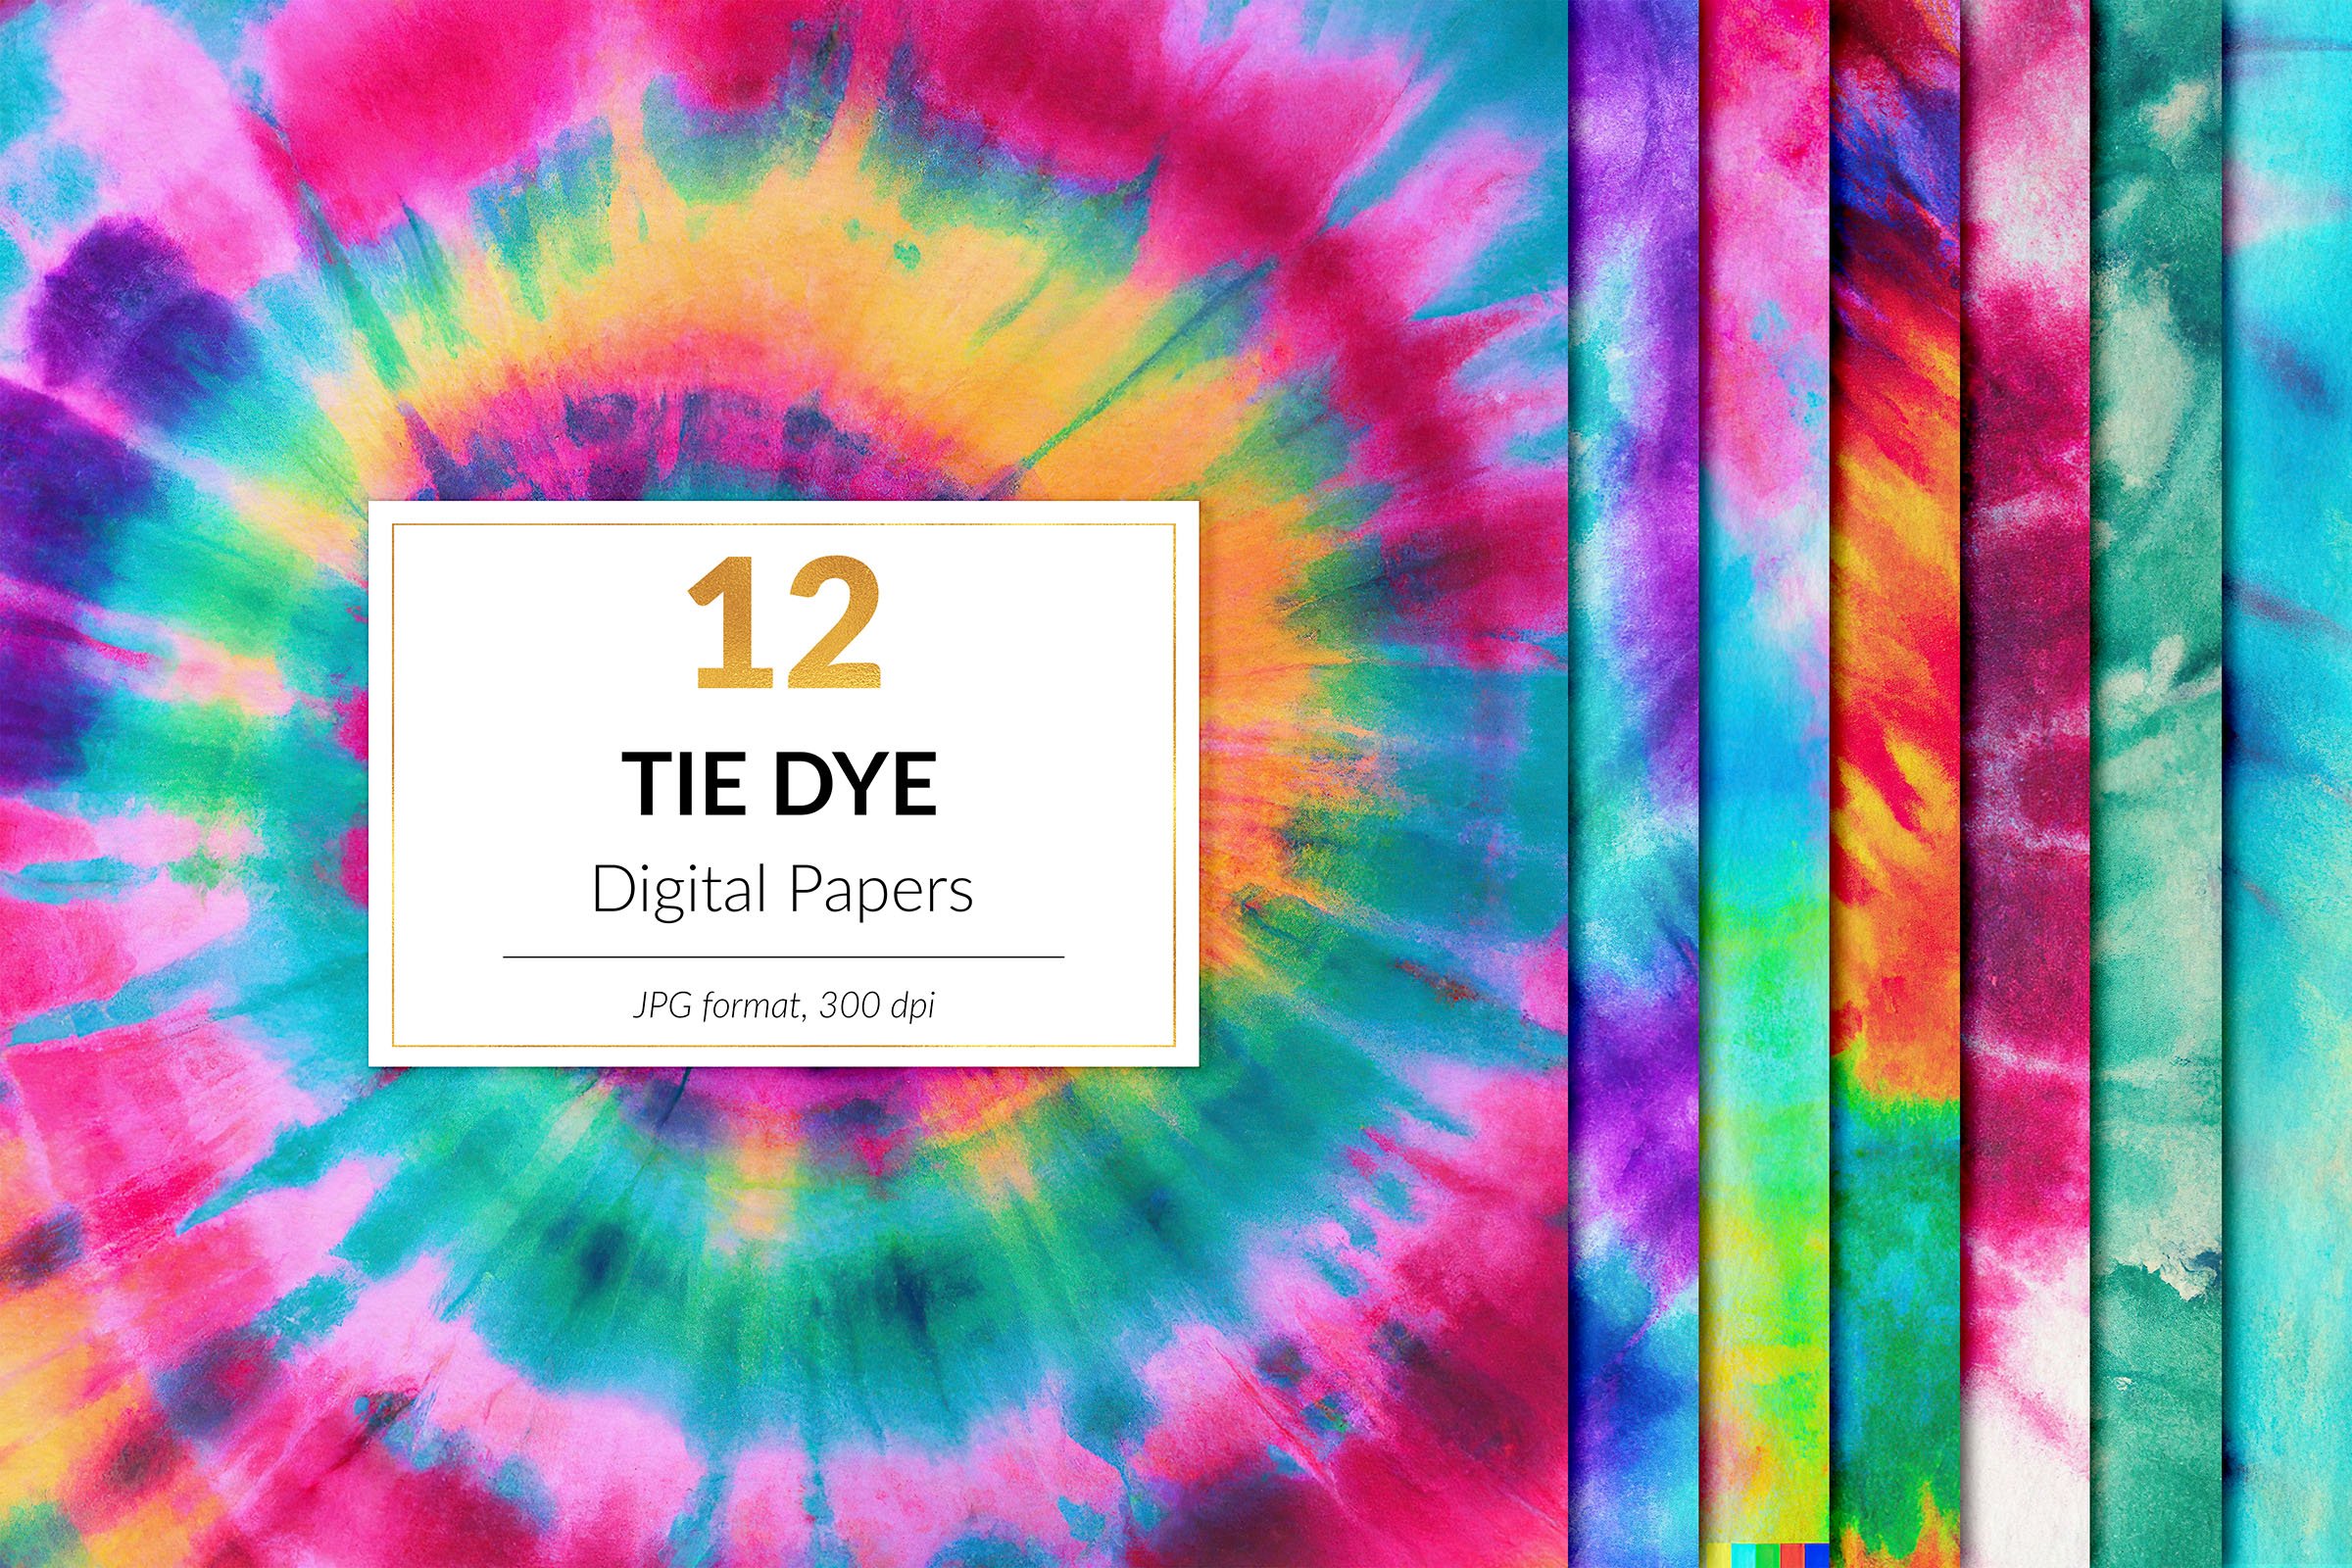 Tie dye digital paper cover image.